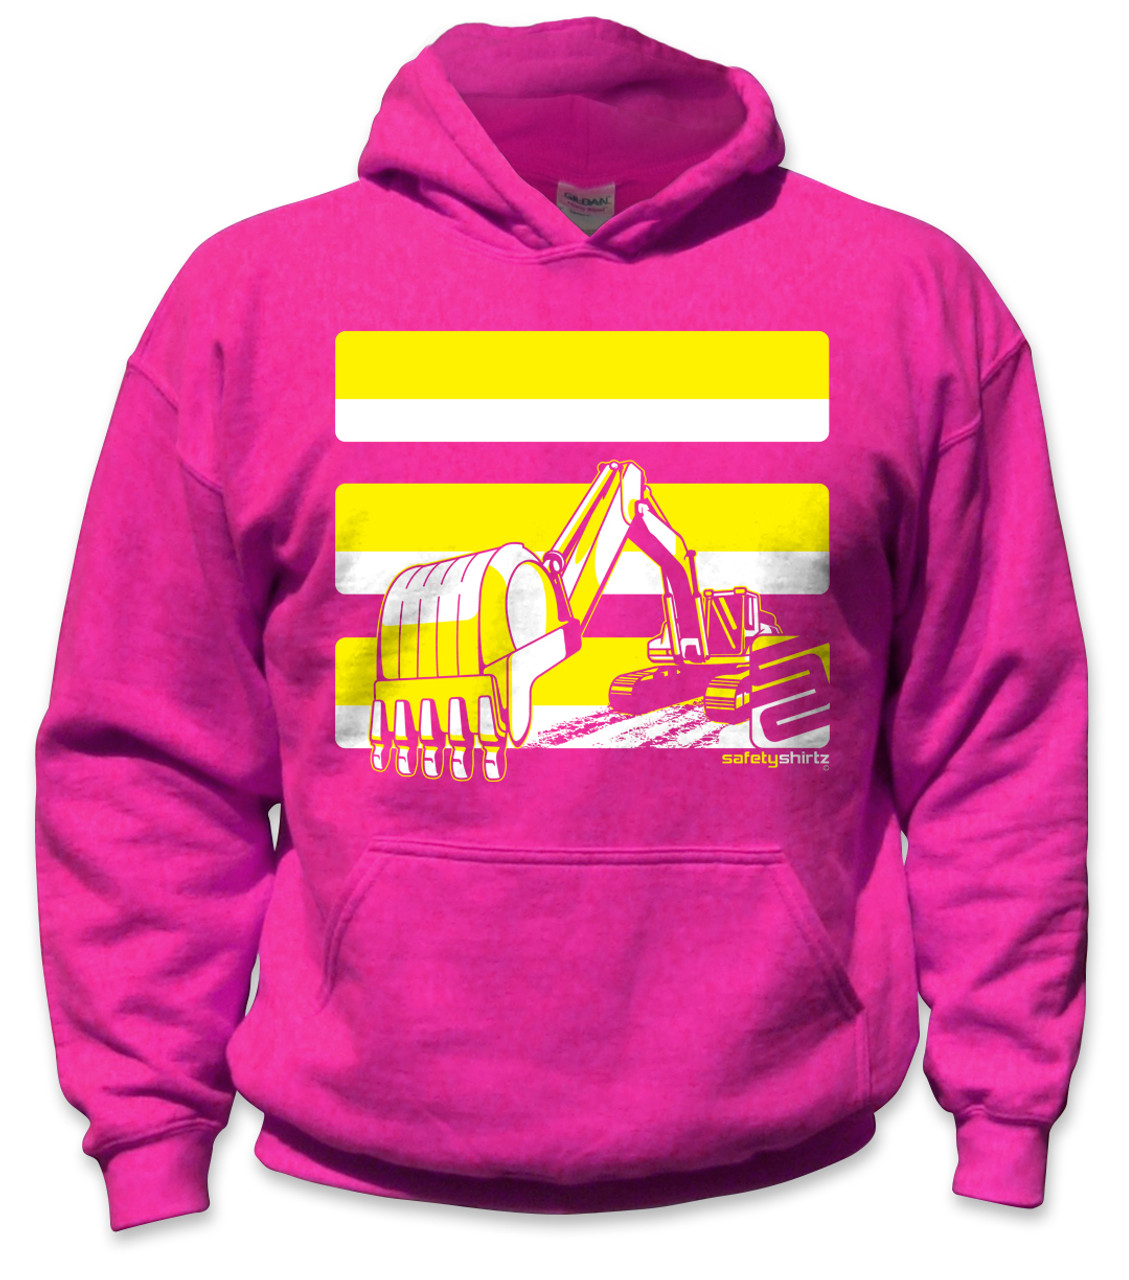 Youth Excavator Safety Hoodie - Yellow/Pink - Safetyshirtz